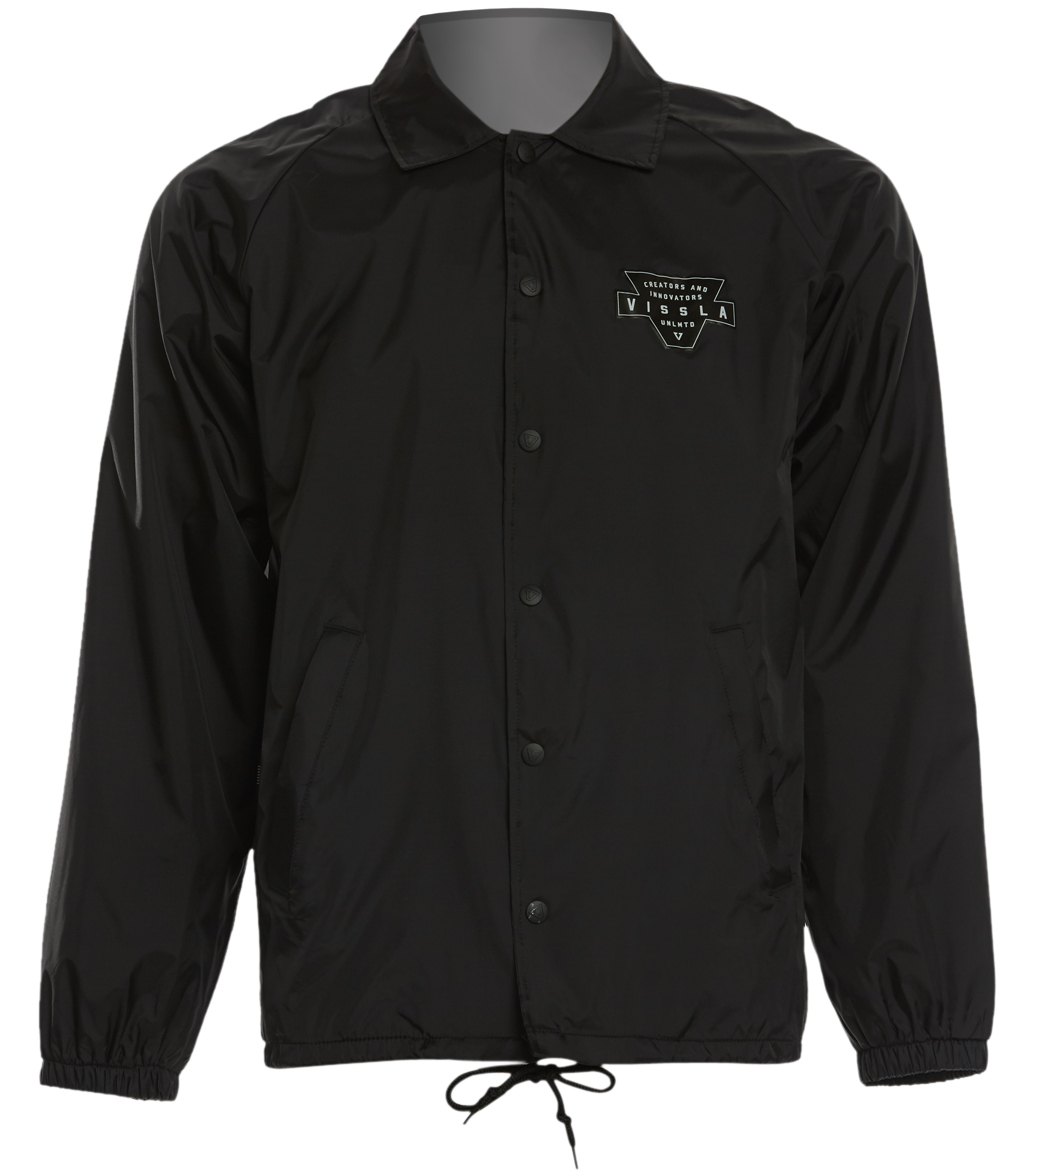 Vissla Men's Vinyl Coaches Jacket - Black Large Nylon - Swimoutlet.com